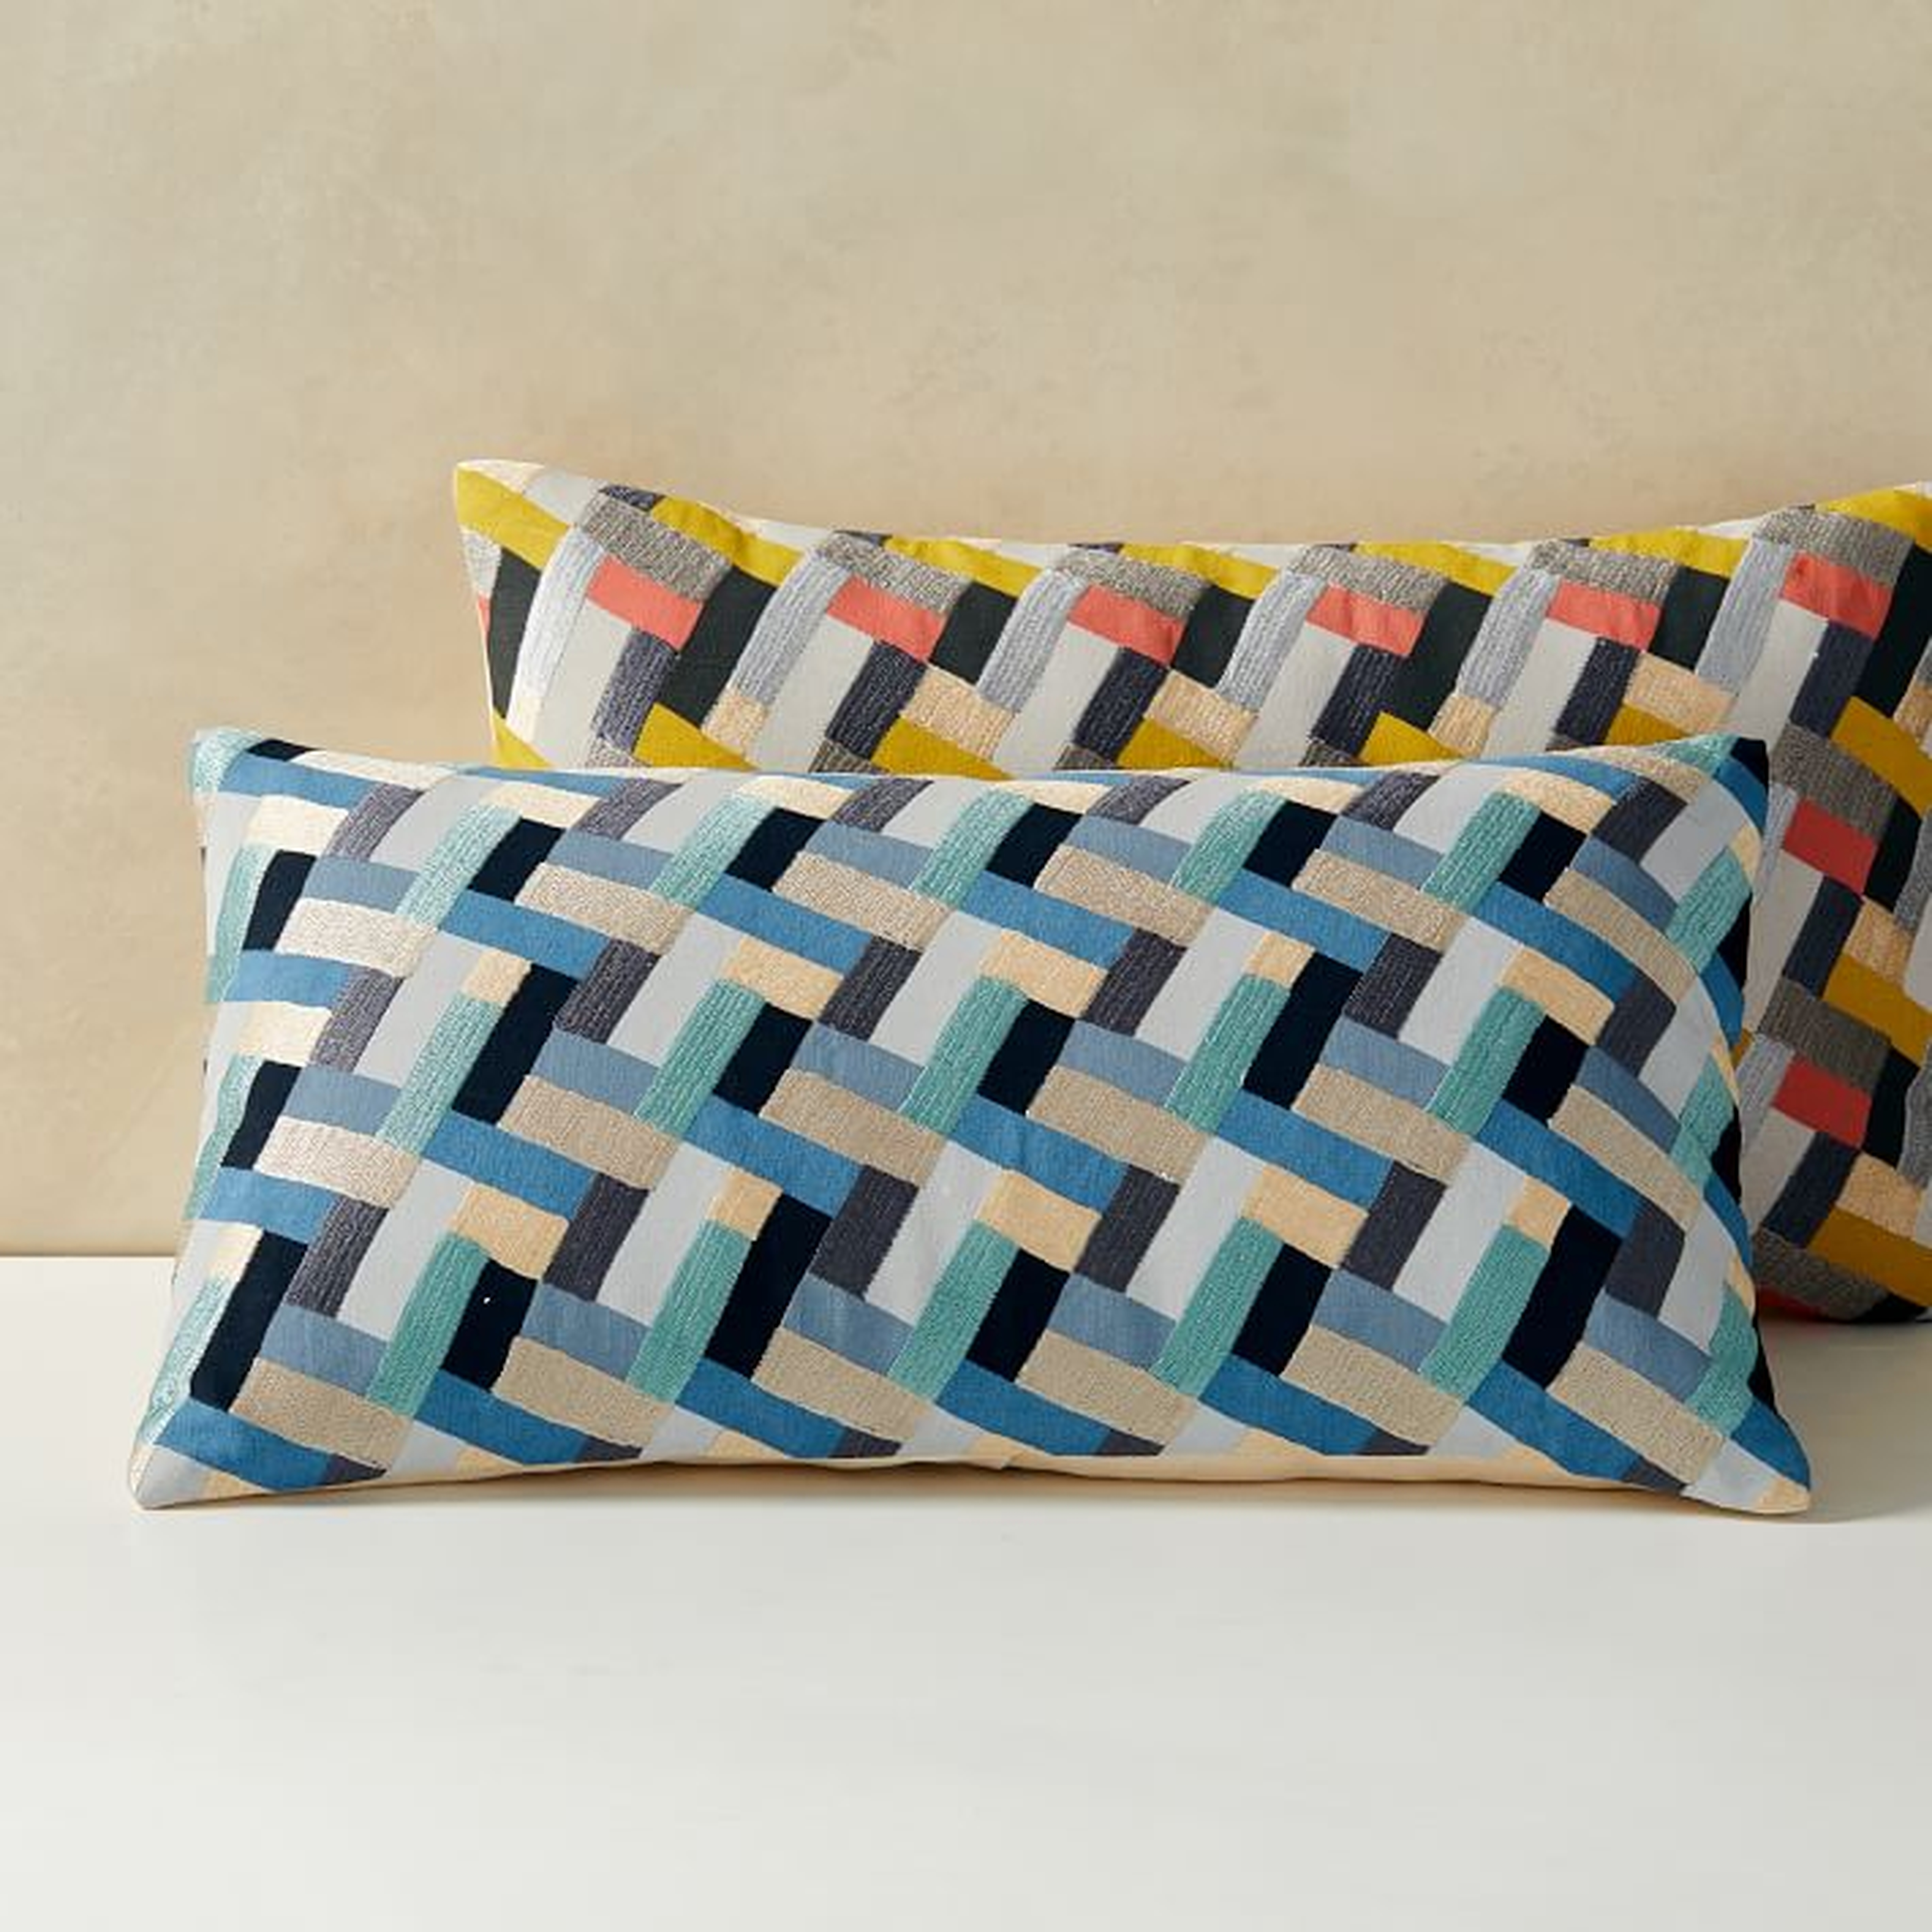 Cody Hoyt Garden Bricks Pillow Cover, 12"x21", Blue Multi - West Elm